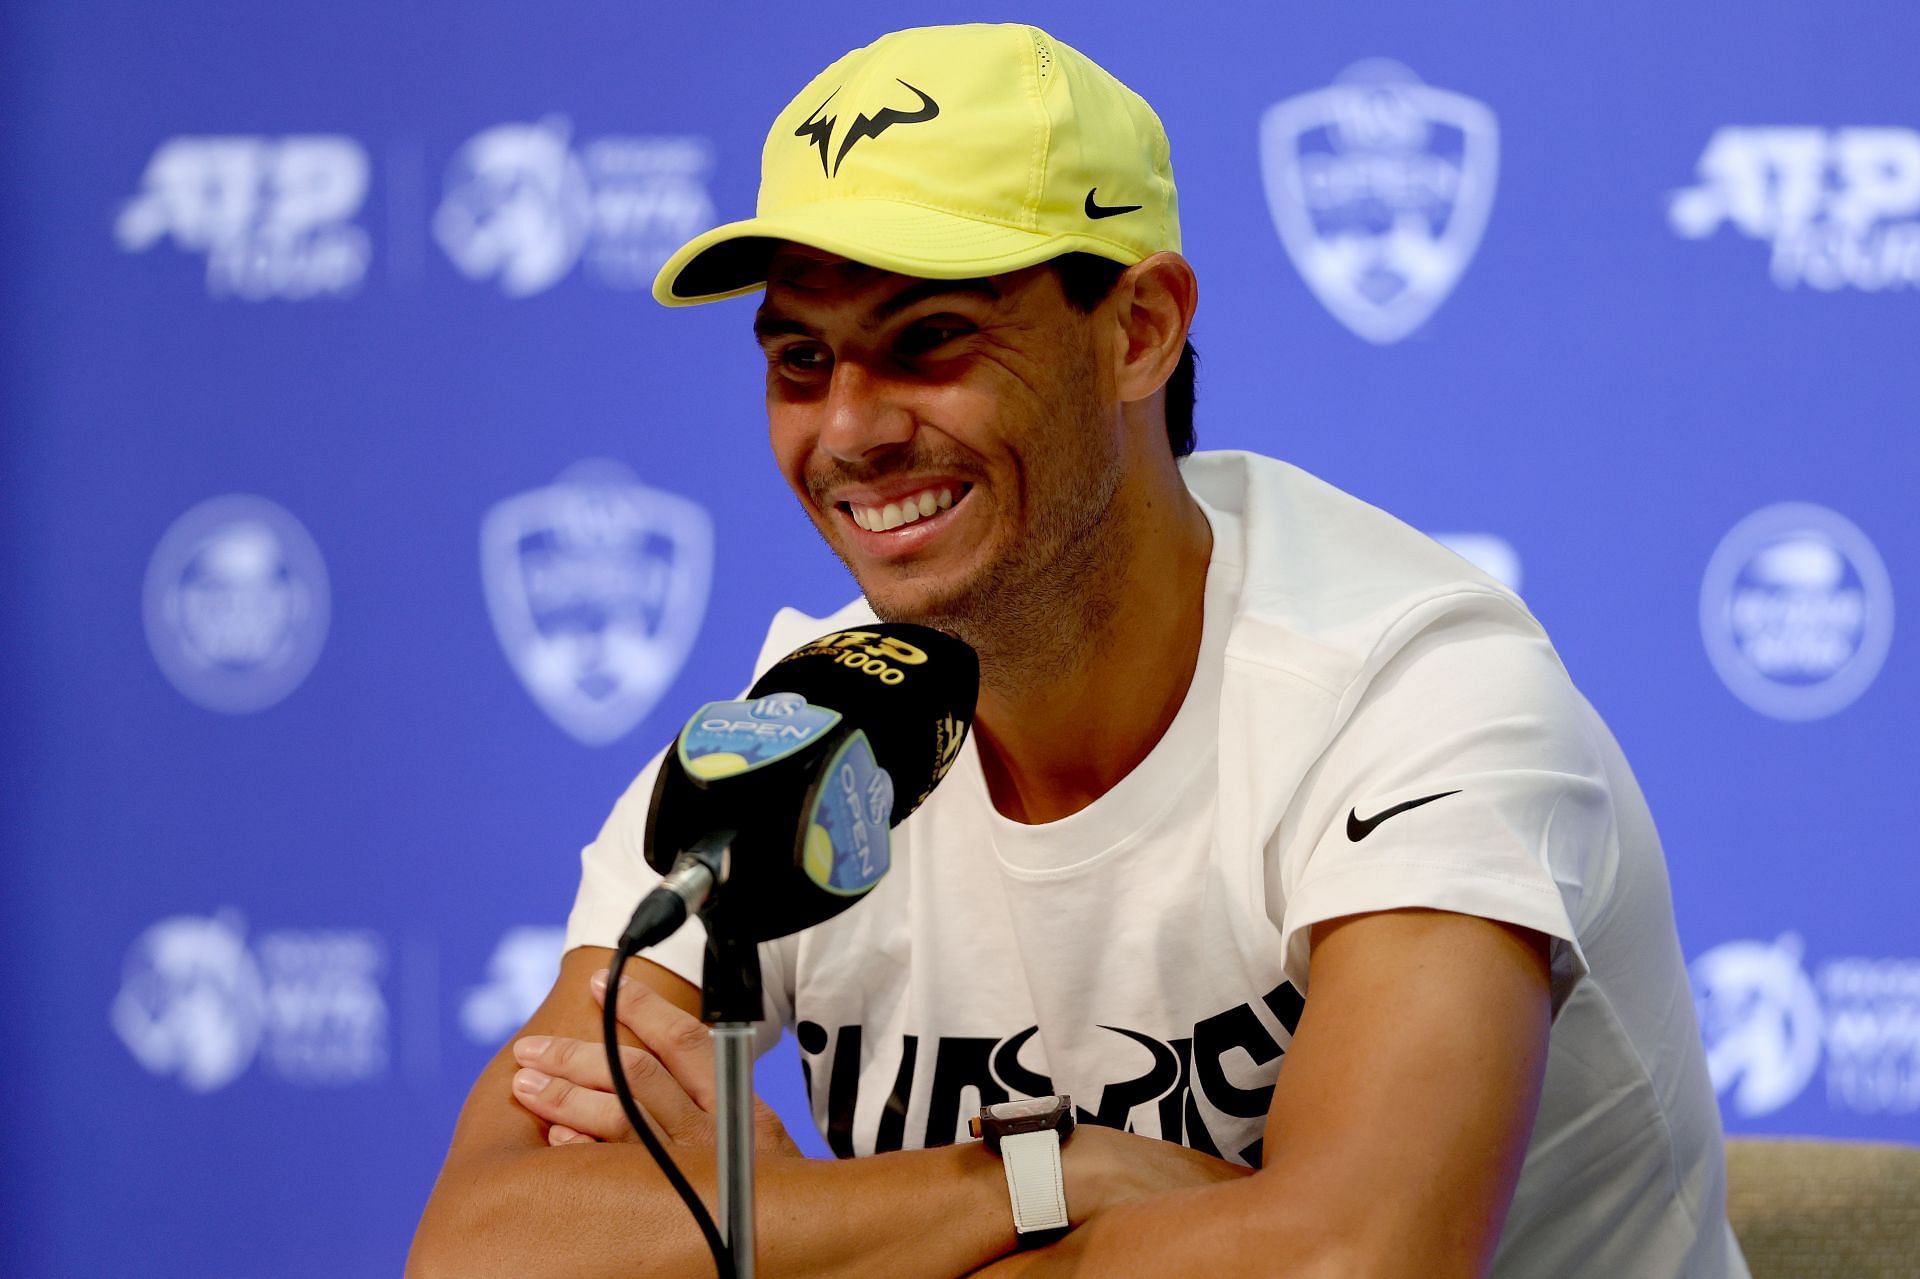 Rafael Nadals next match Opponent, venue, live streaming, TV channel and schedule Cincinnati 2022, Round 2